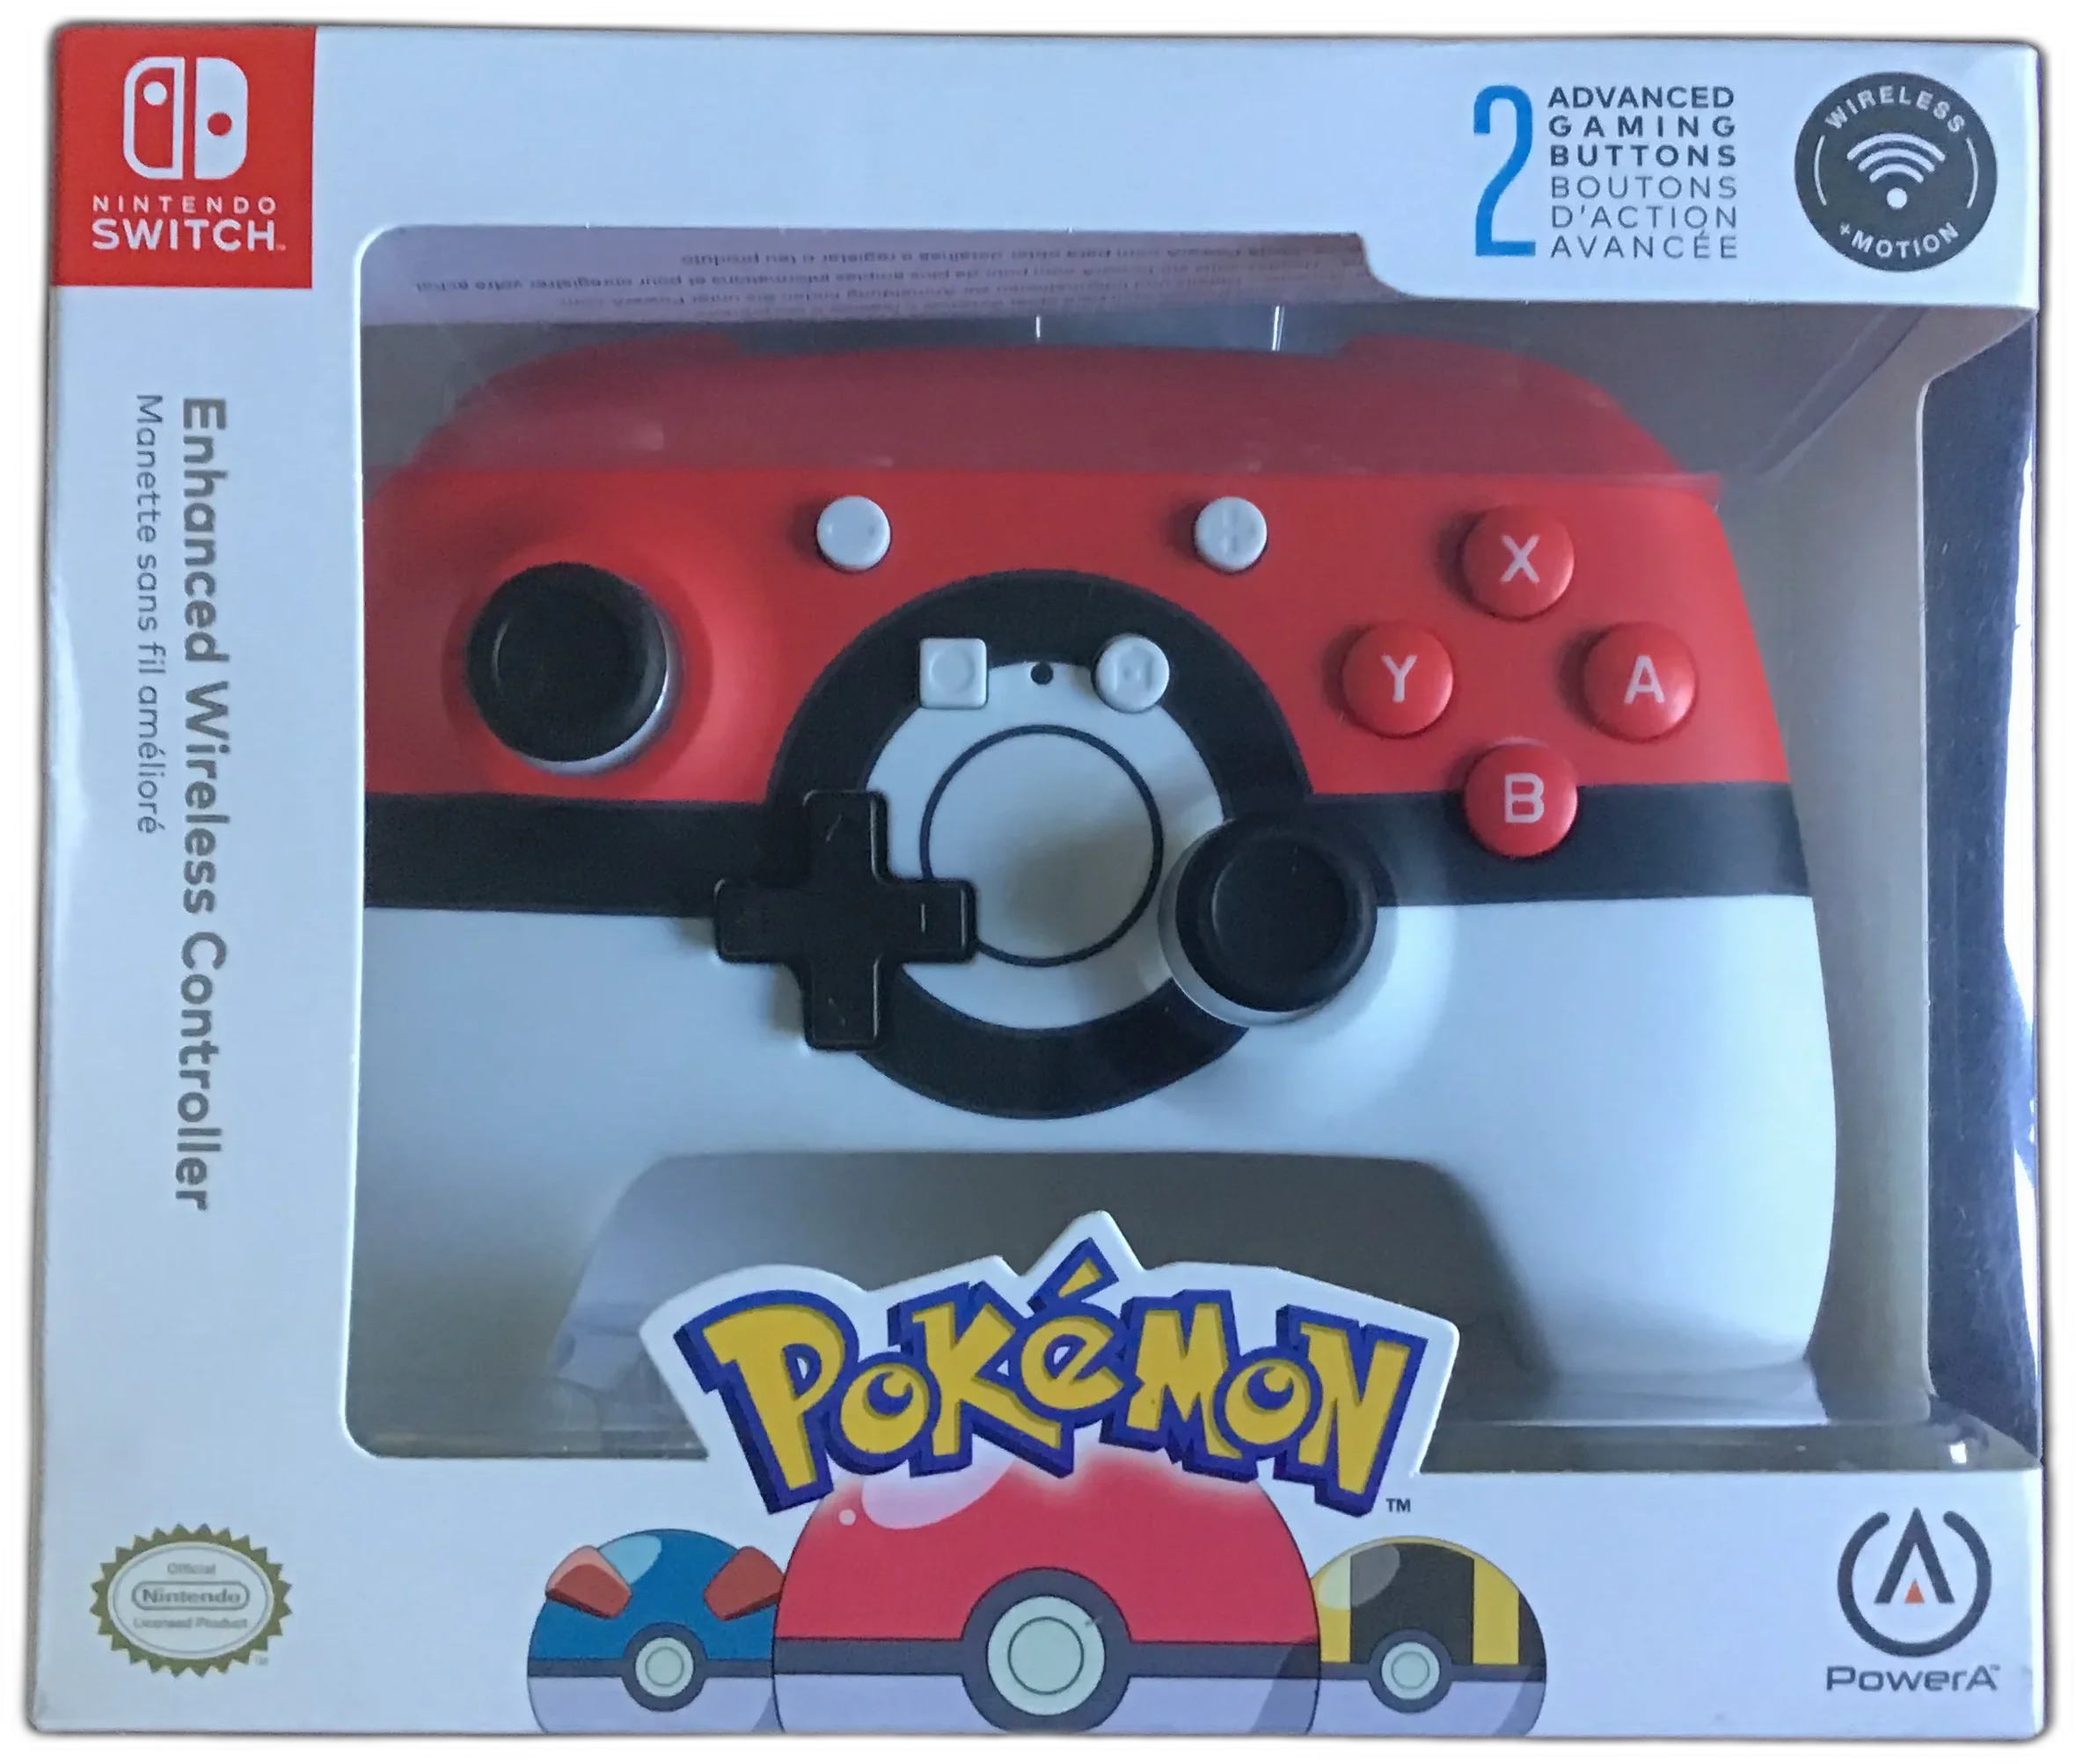  Power A Switch Pokemon Pokeball Enhanced Wireless Controller